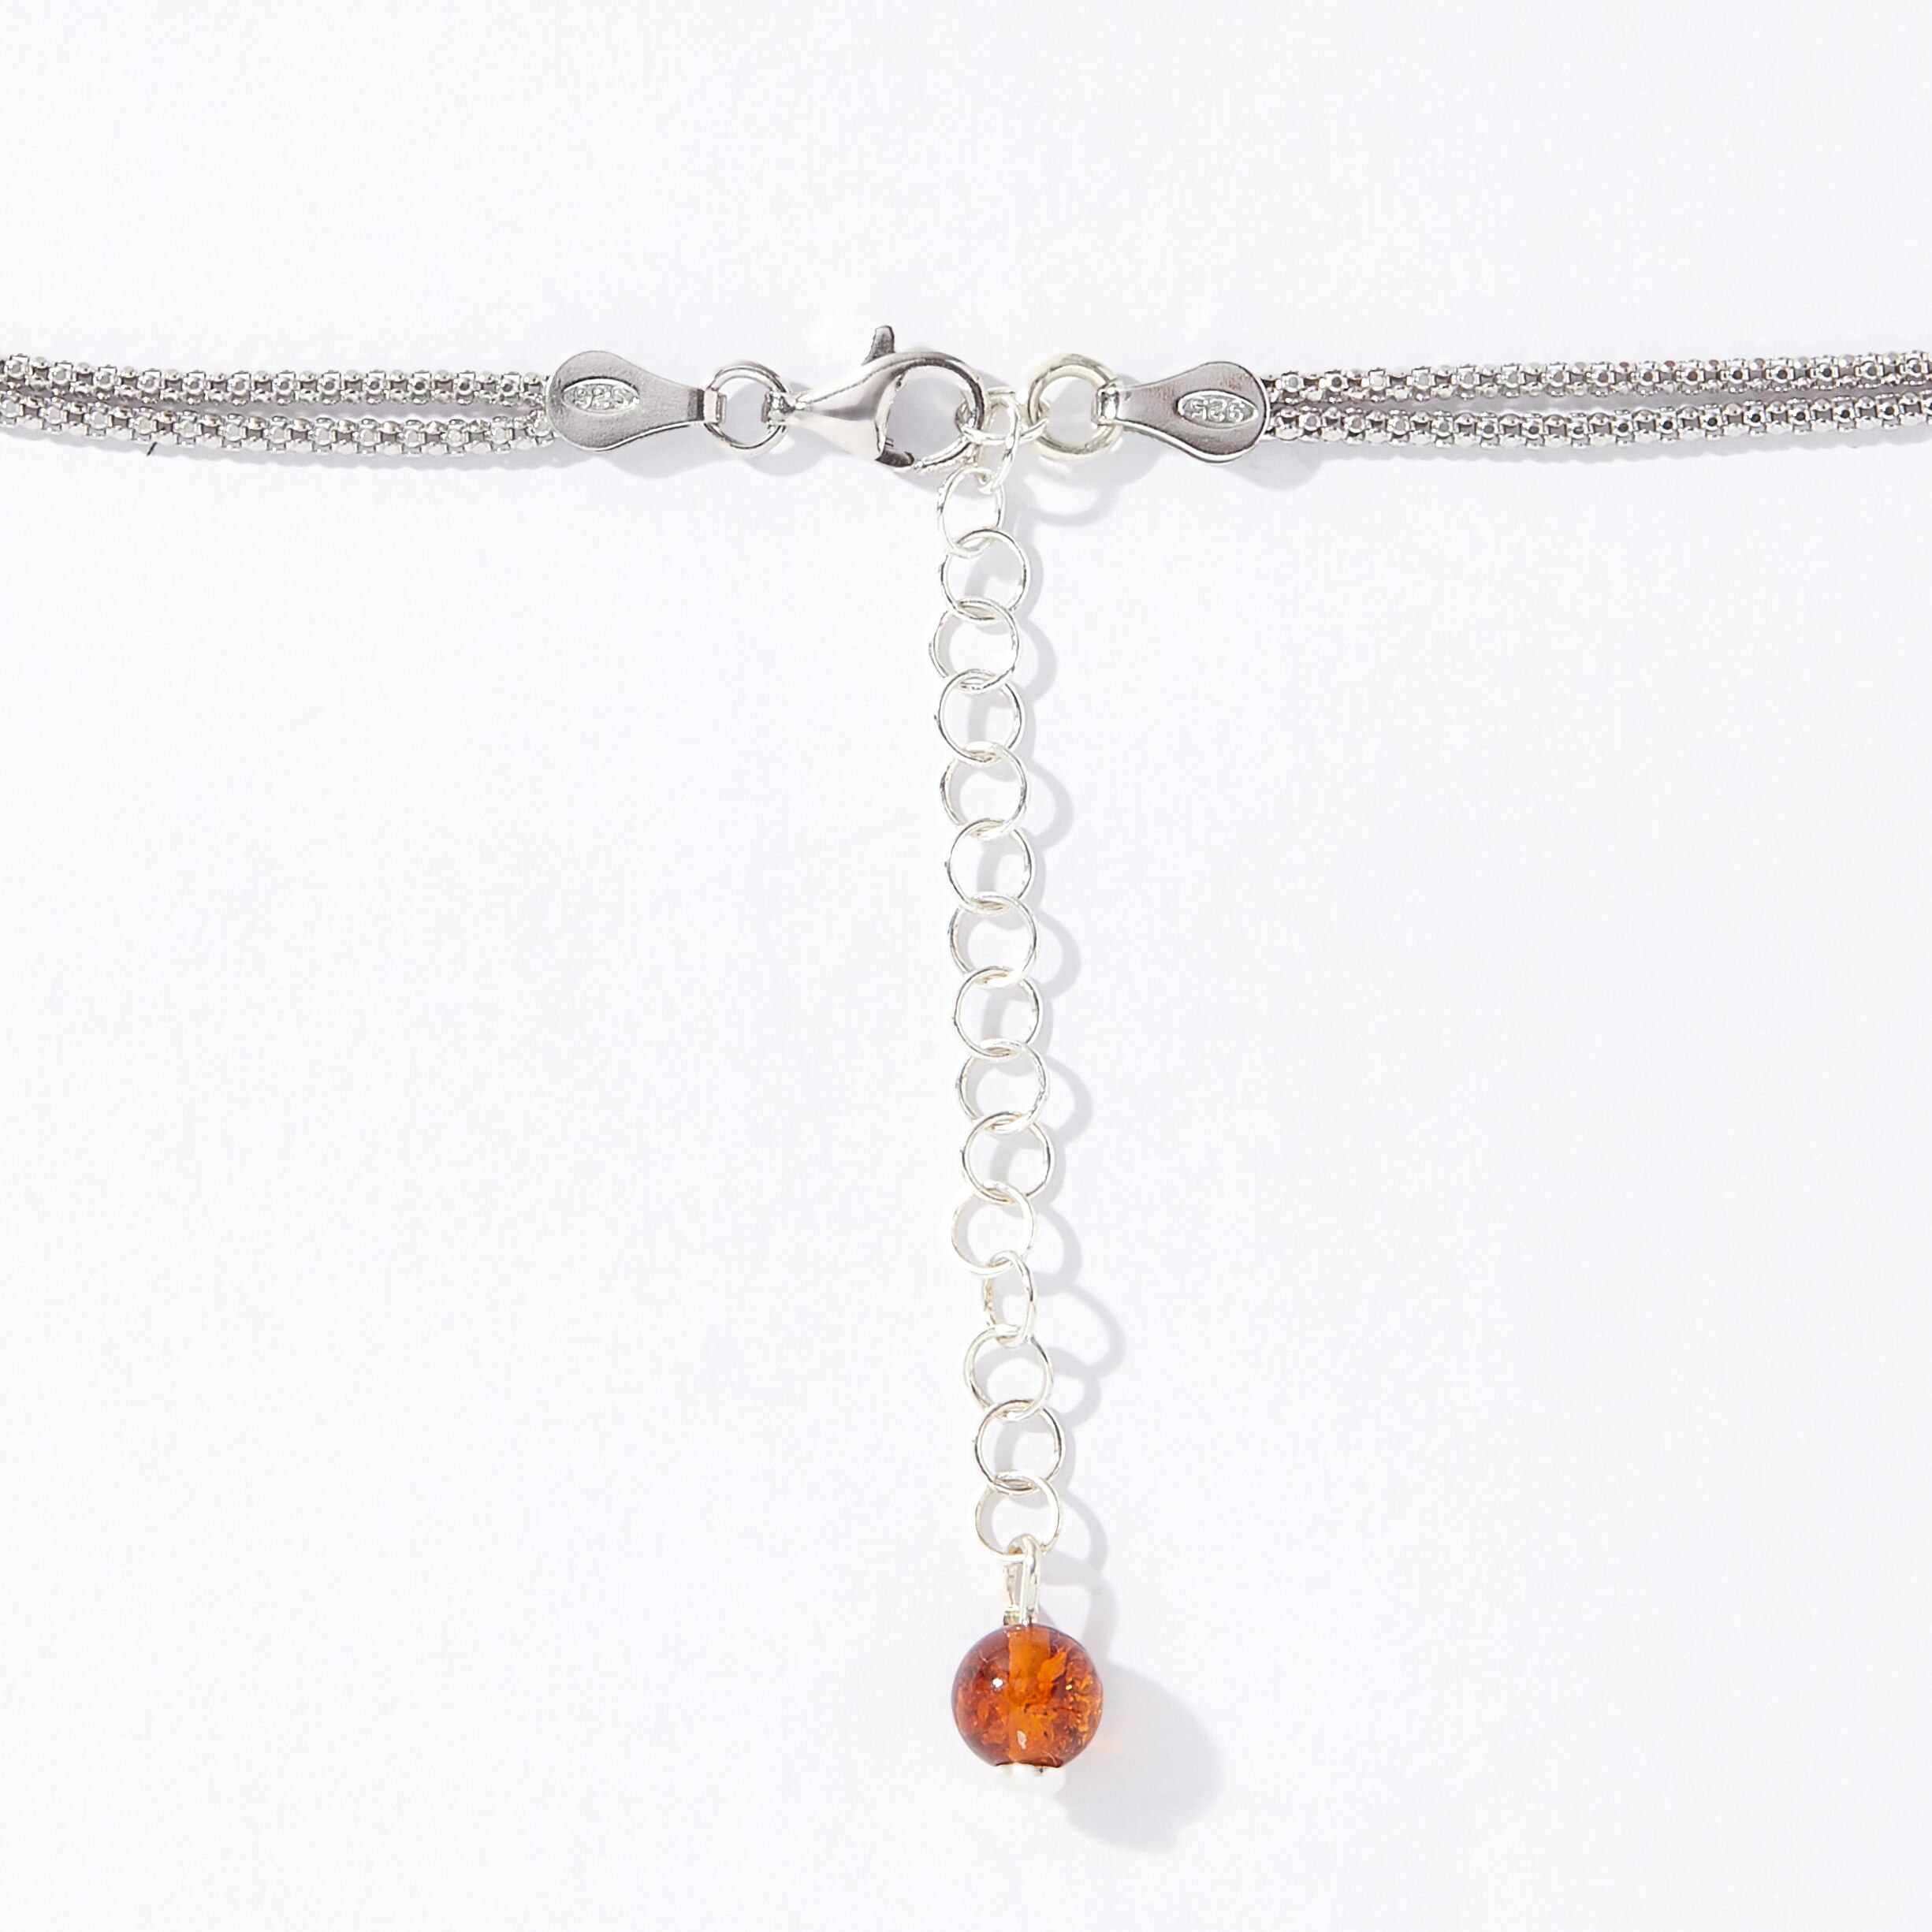 Jewellery - Necklaces & Pendants - Necklaces - Amber